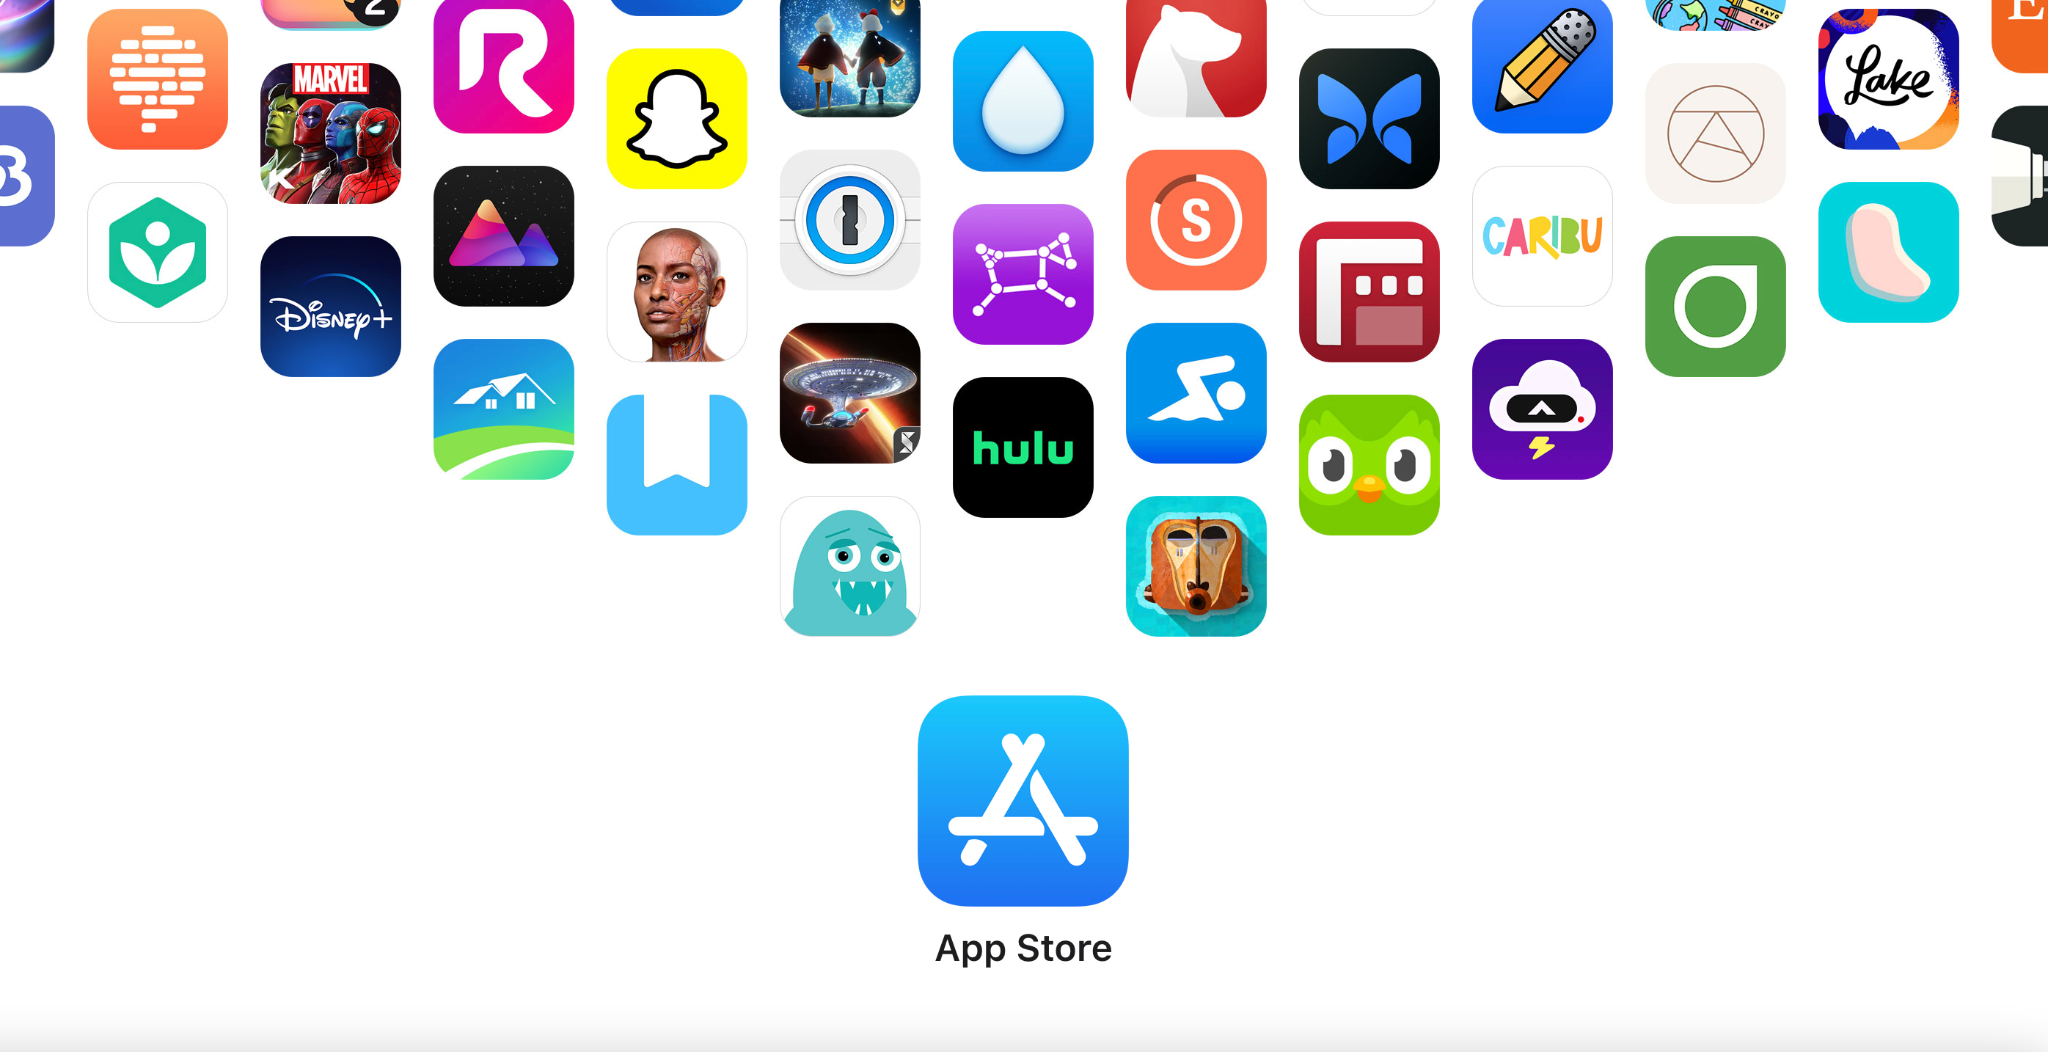 App Store First Screen